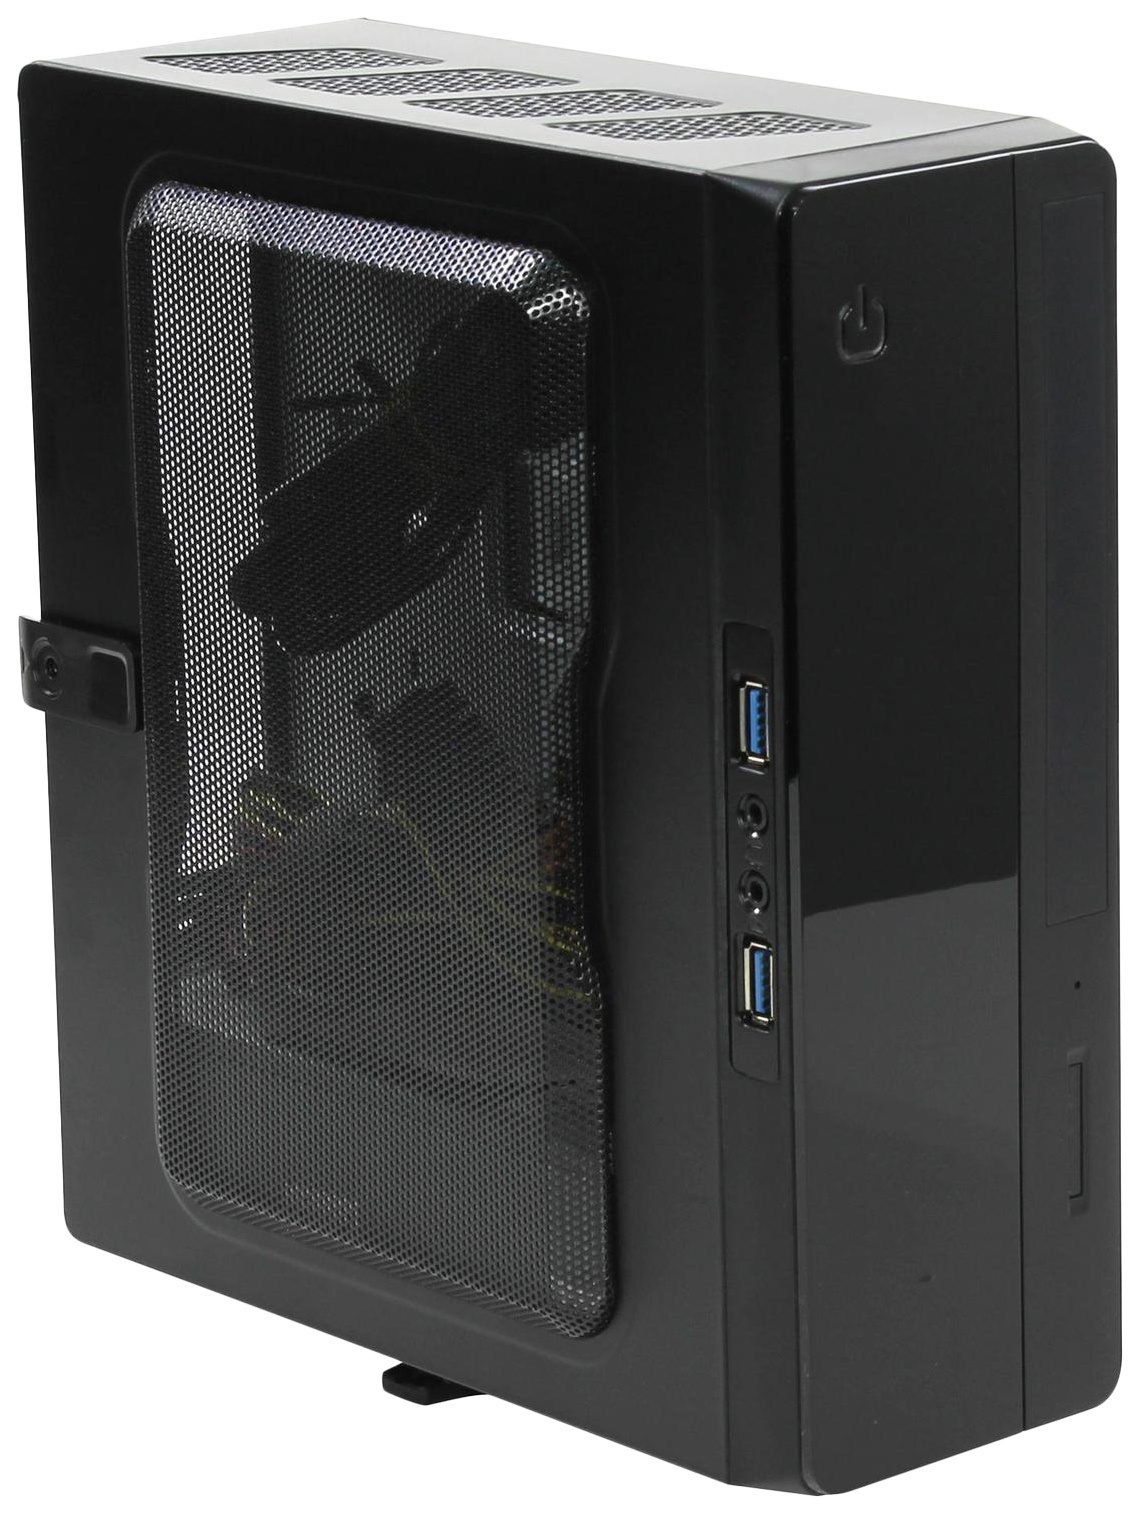 Компьютерный корпус Powerman EQ-101 200 вт black - отзывы покупателей на маркетплейсе Мегамаркет | Артикул: 100023809525